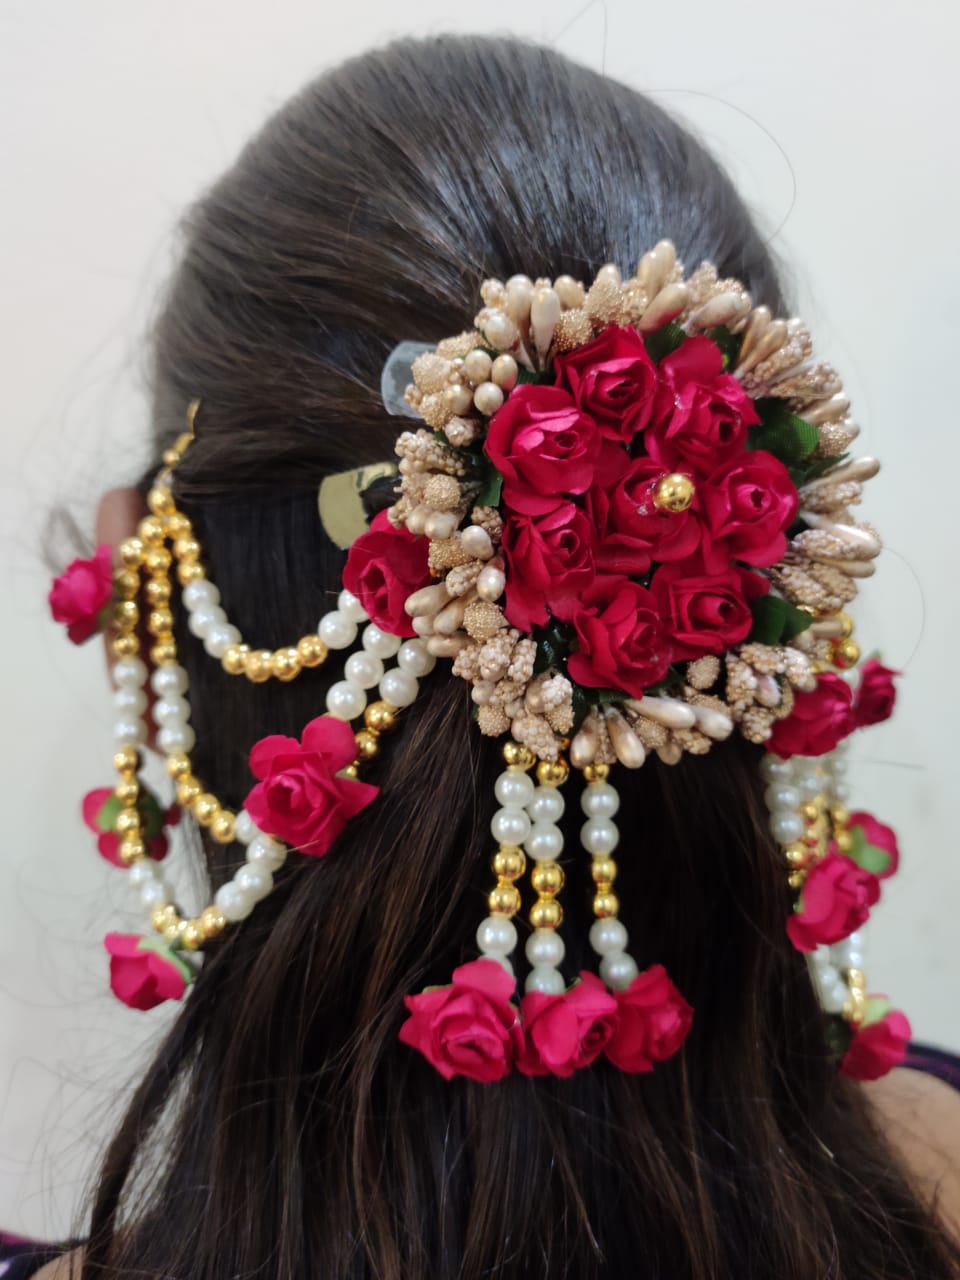 5 Pieces Lot Artificial Gajra Hair Accessories Flower - Etsy Hong Kong